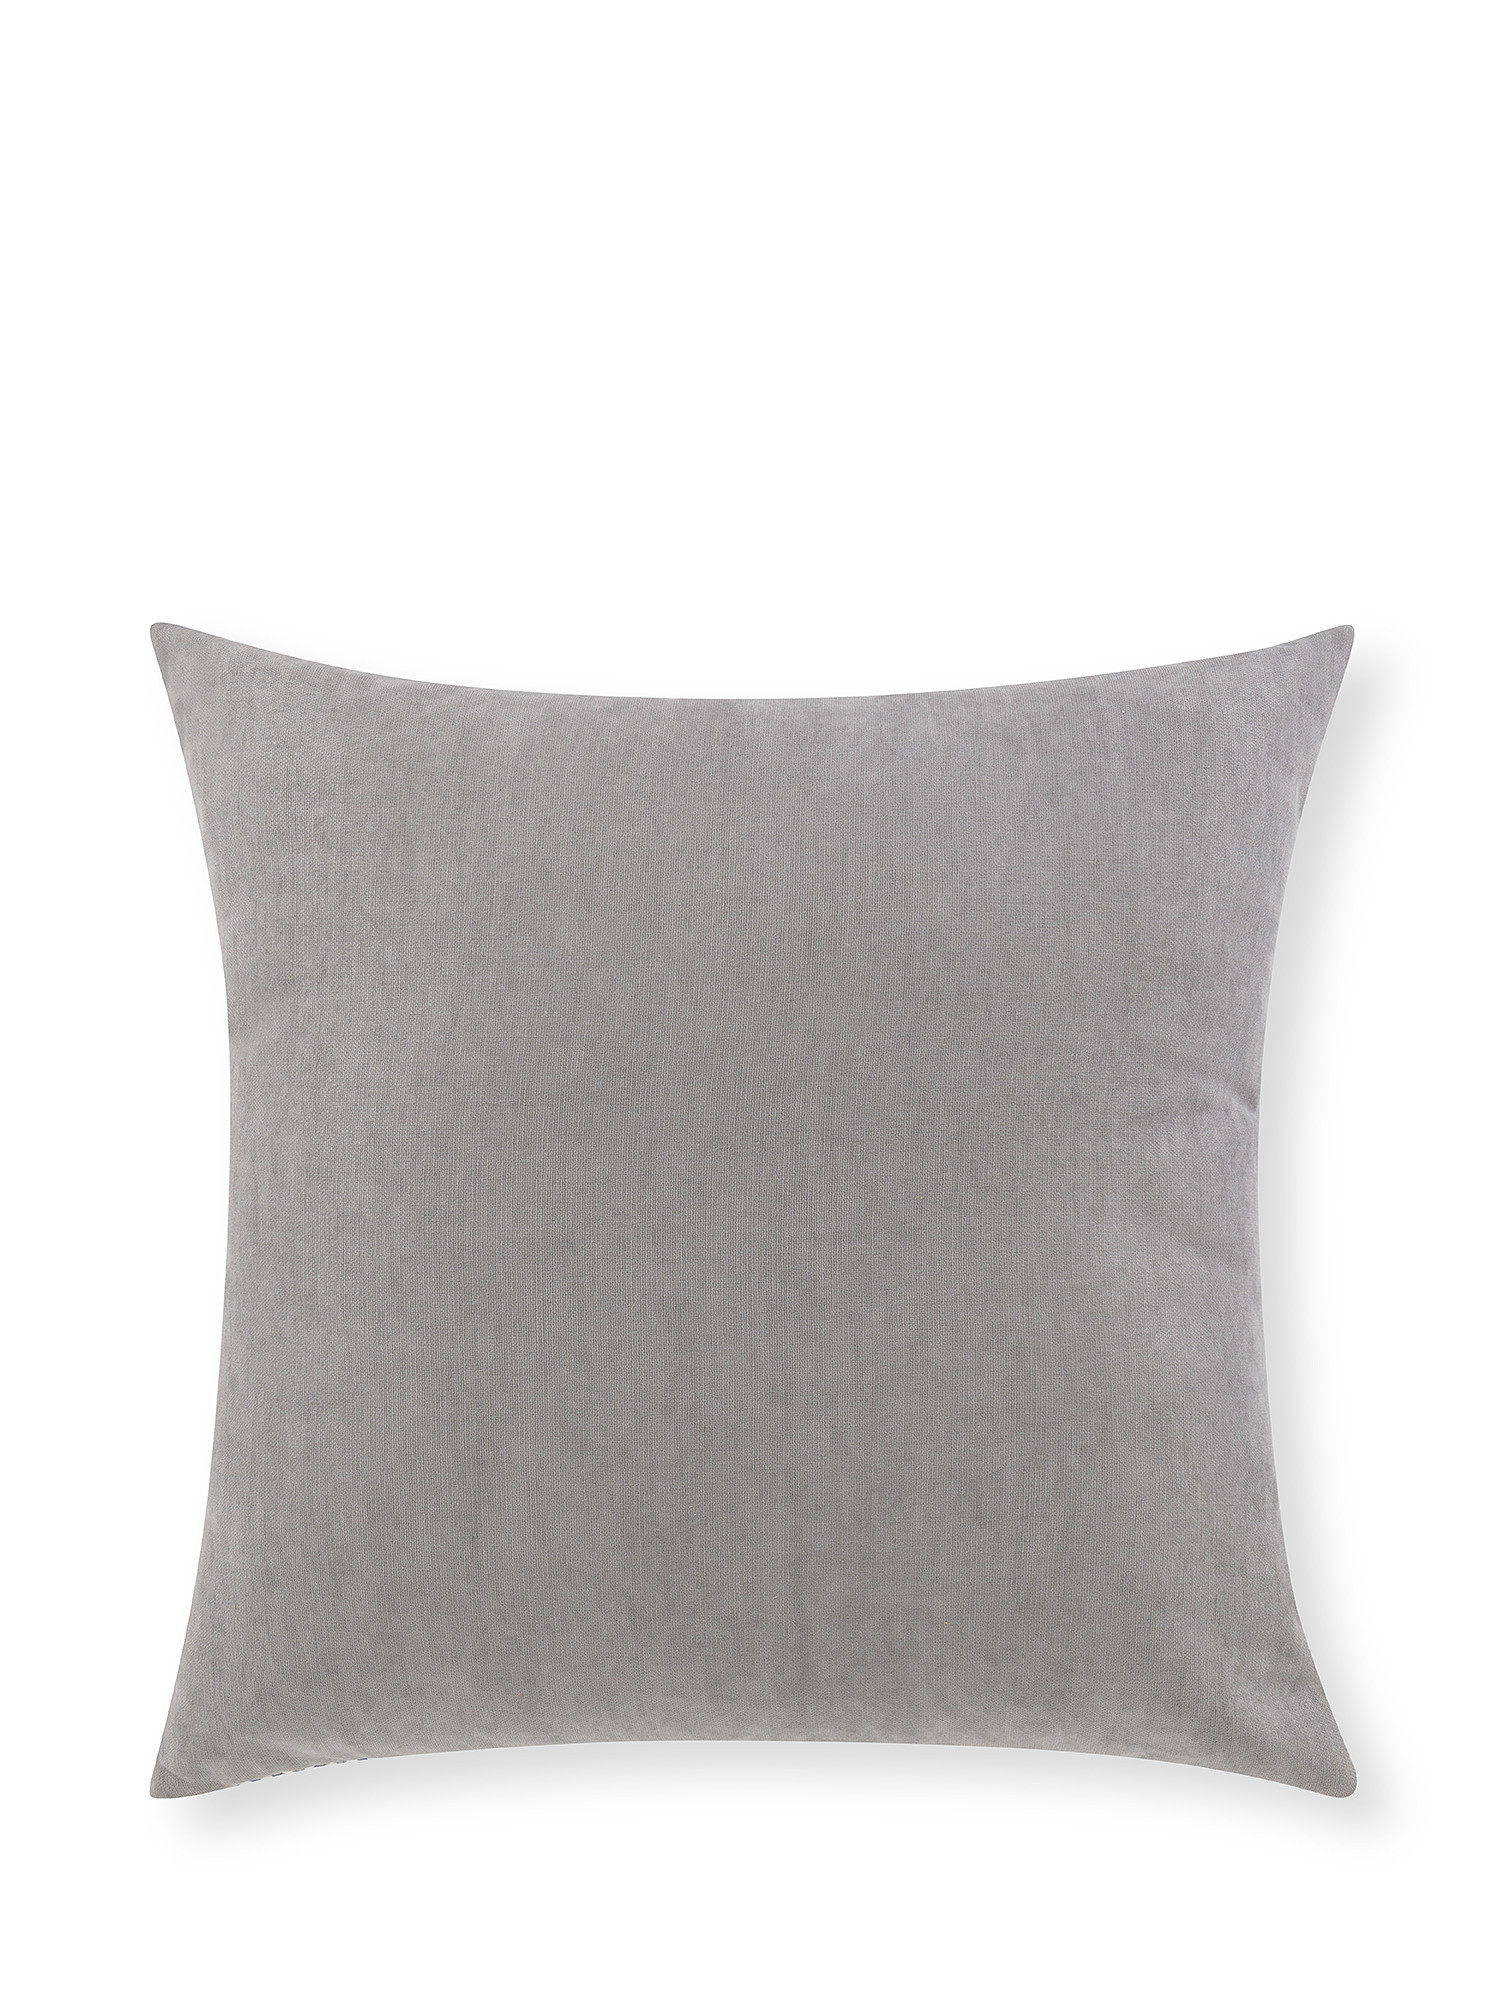 Cotton jacquard cushion with geometric pattern 45x45cm, Beige, large image number 1